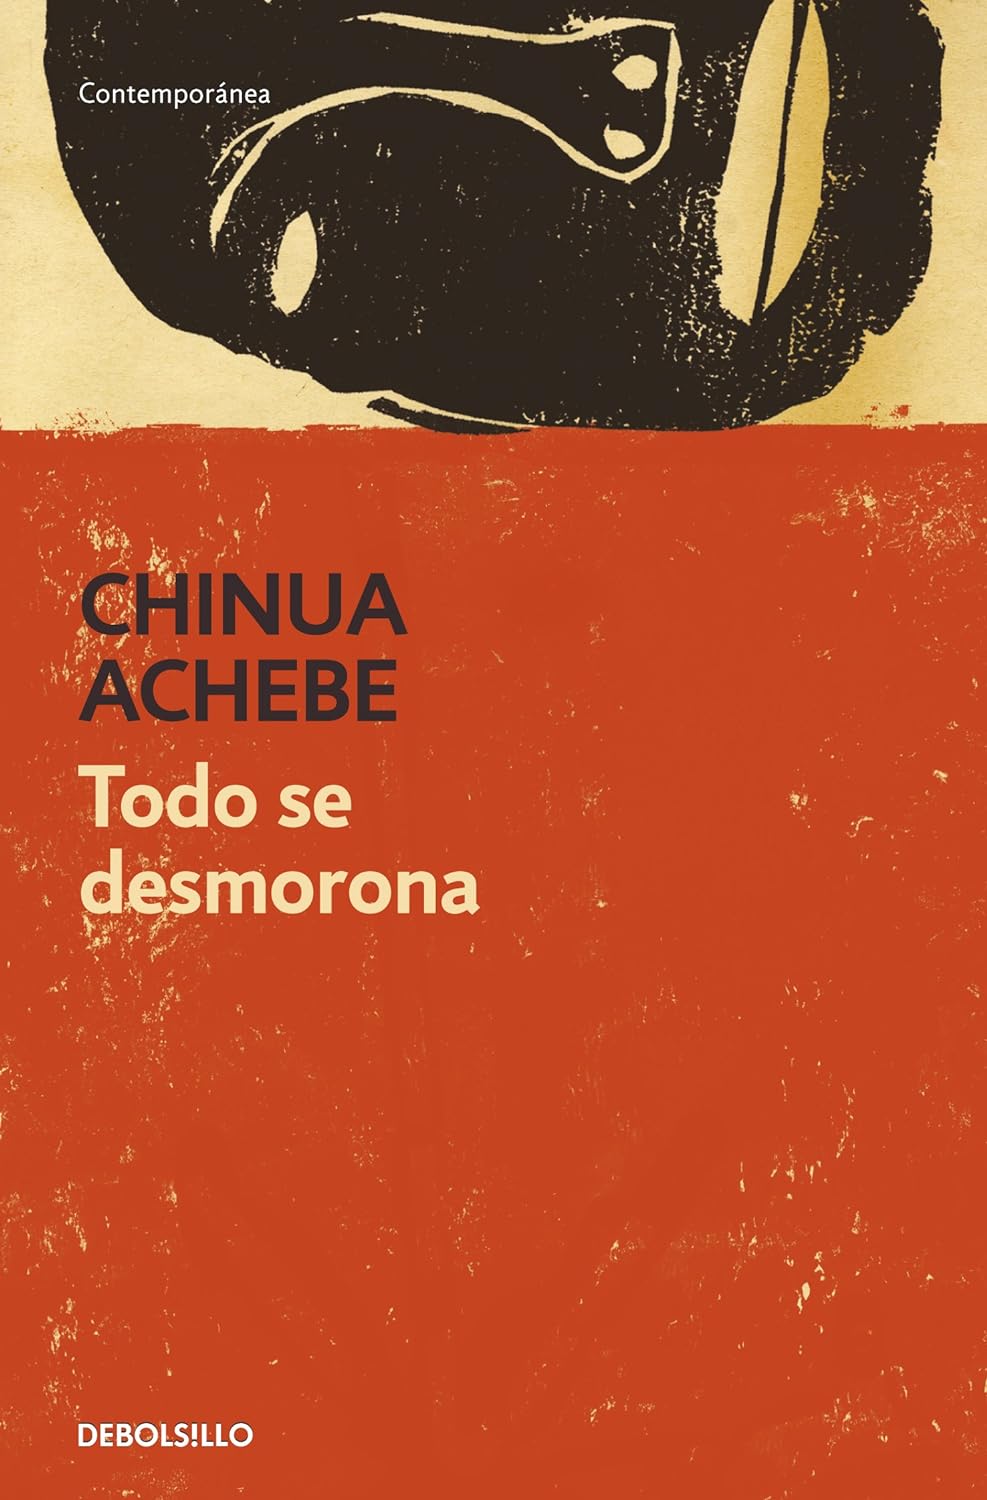 Zenda recomienda: Todo se desmorona, de Chinua Achebe